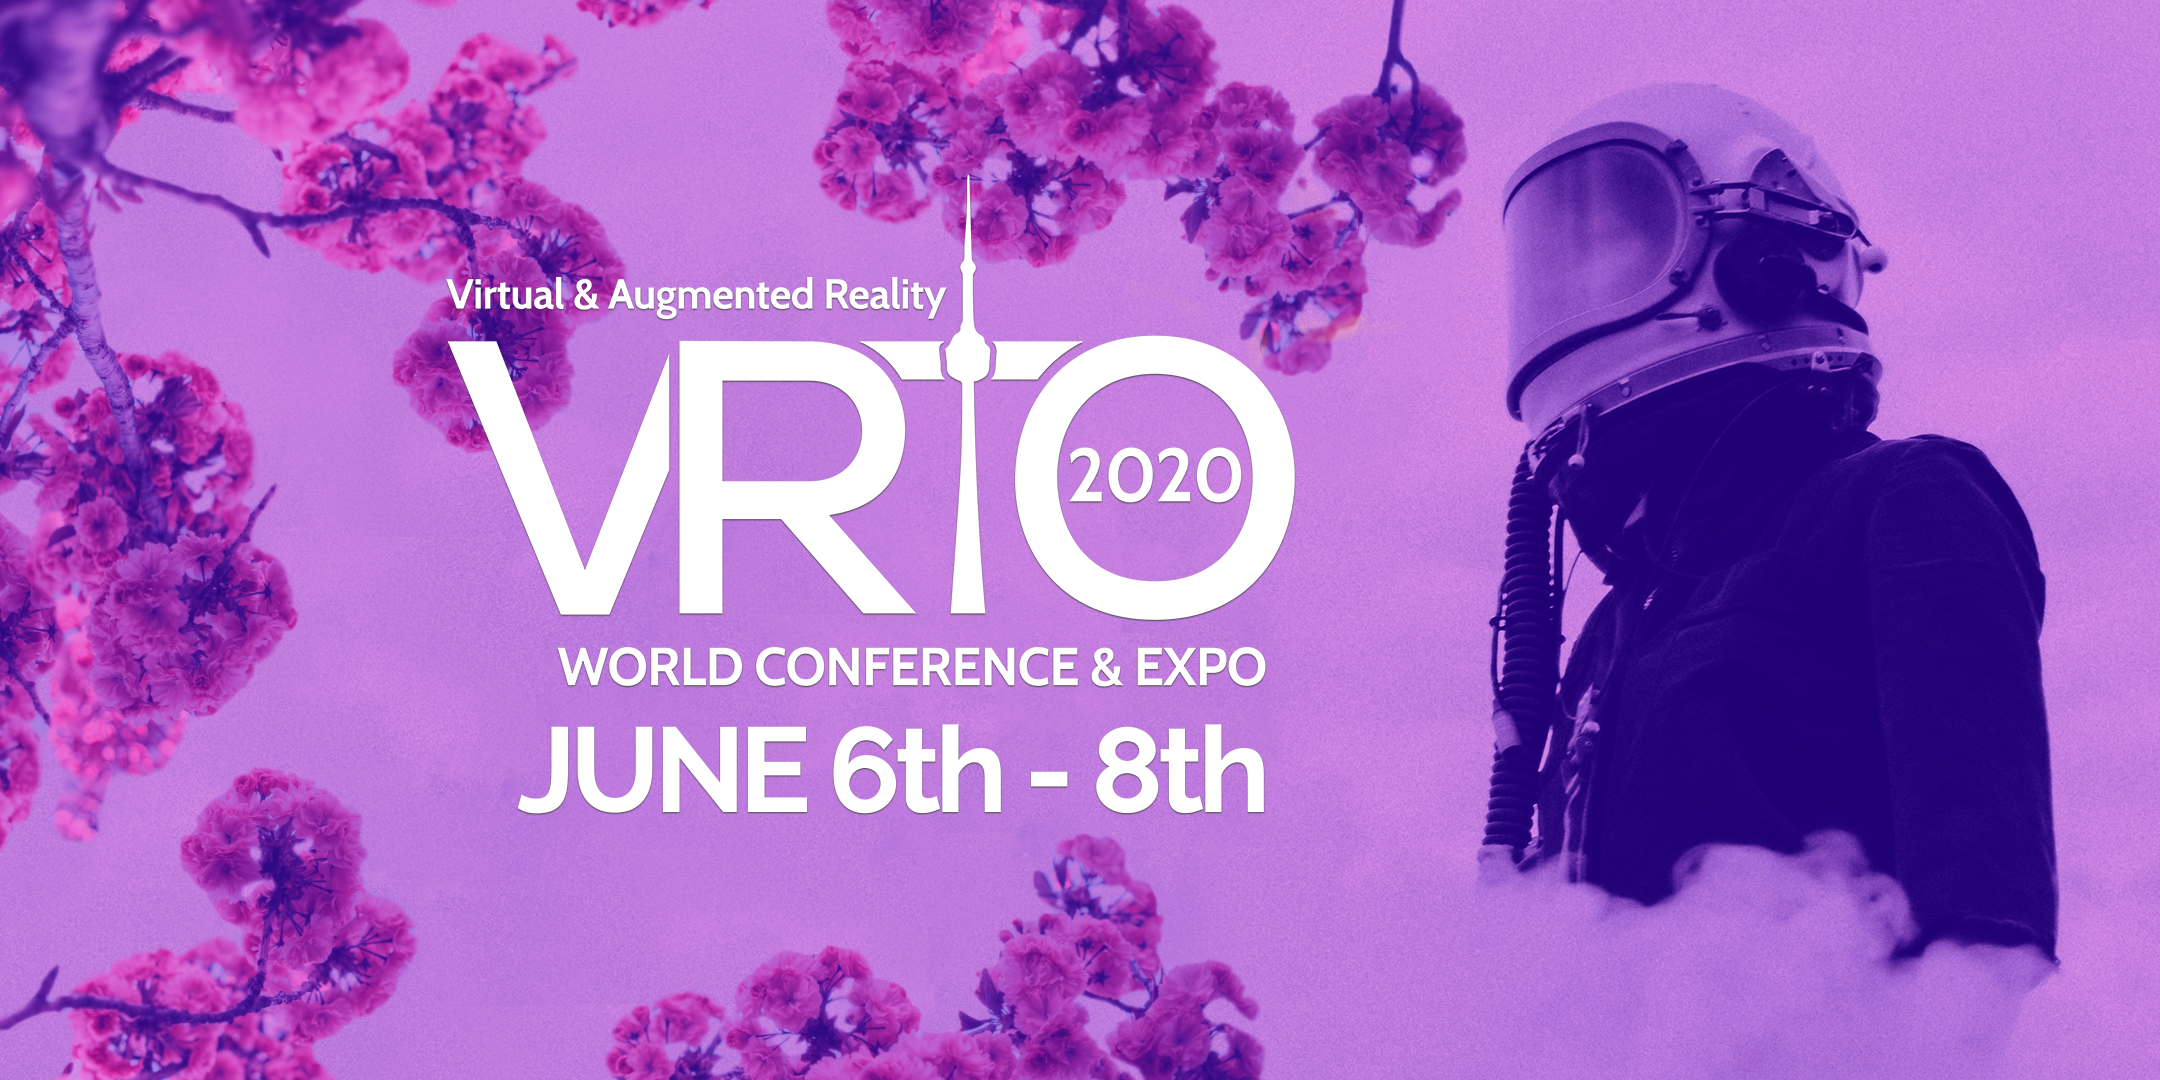 VRTO 2020 Virtual Reality & Augmented Reality World Conference